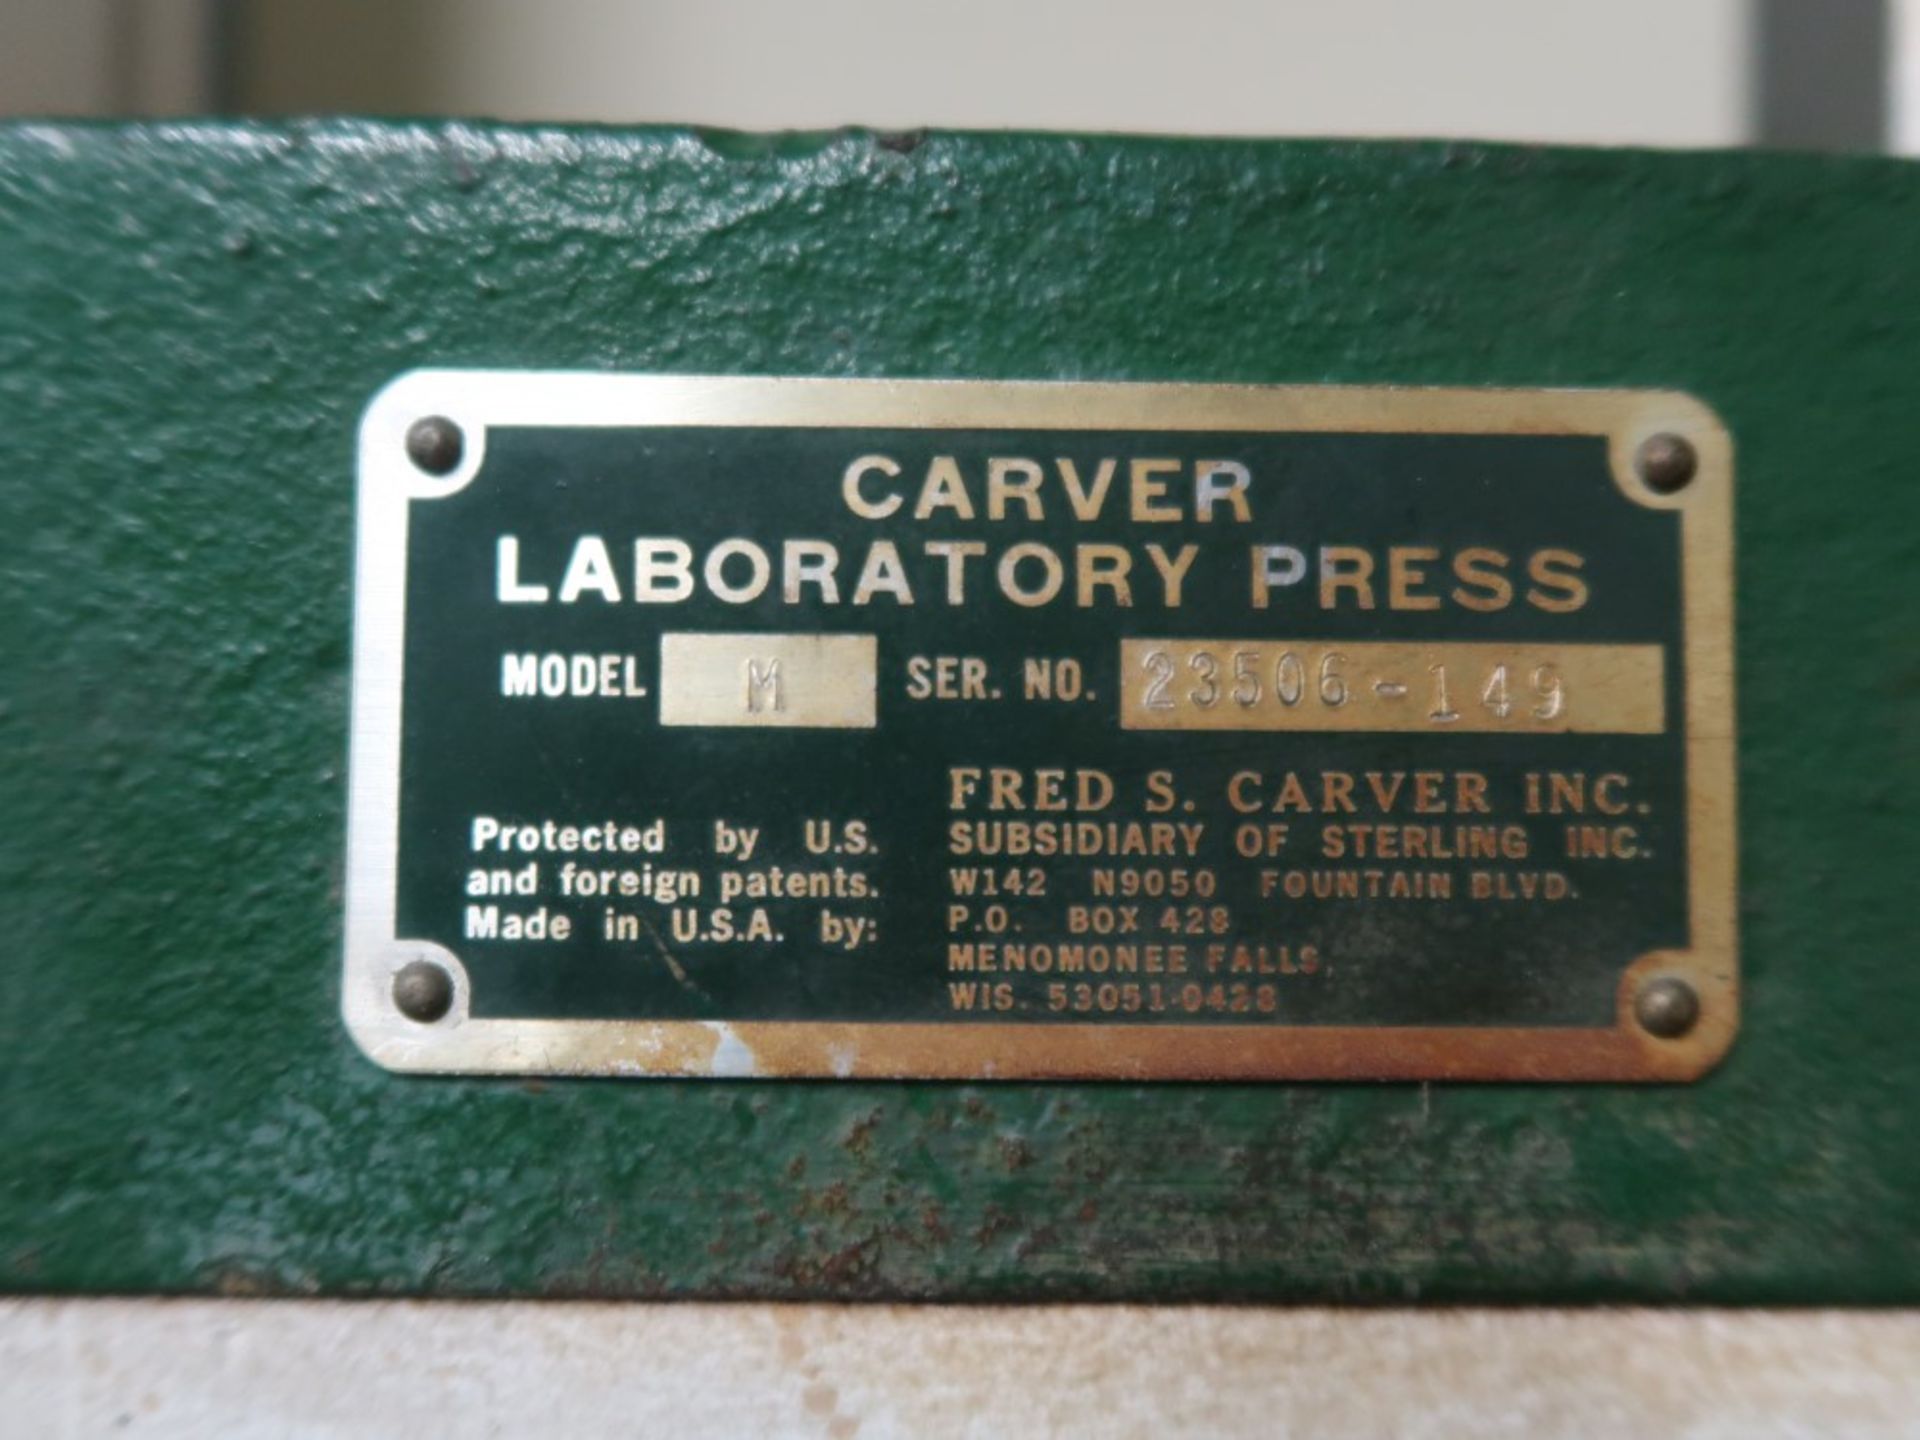 Carver Laboratory Press Model M S/N 23506-149 - Image 5 of 5